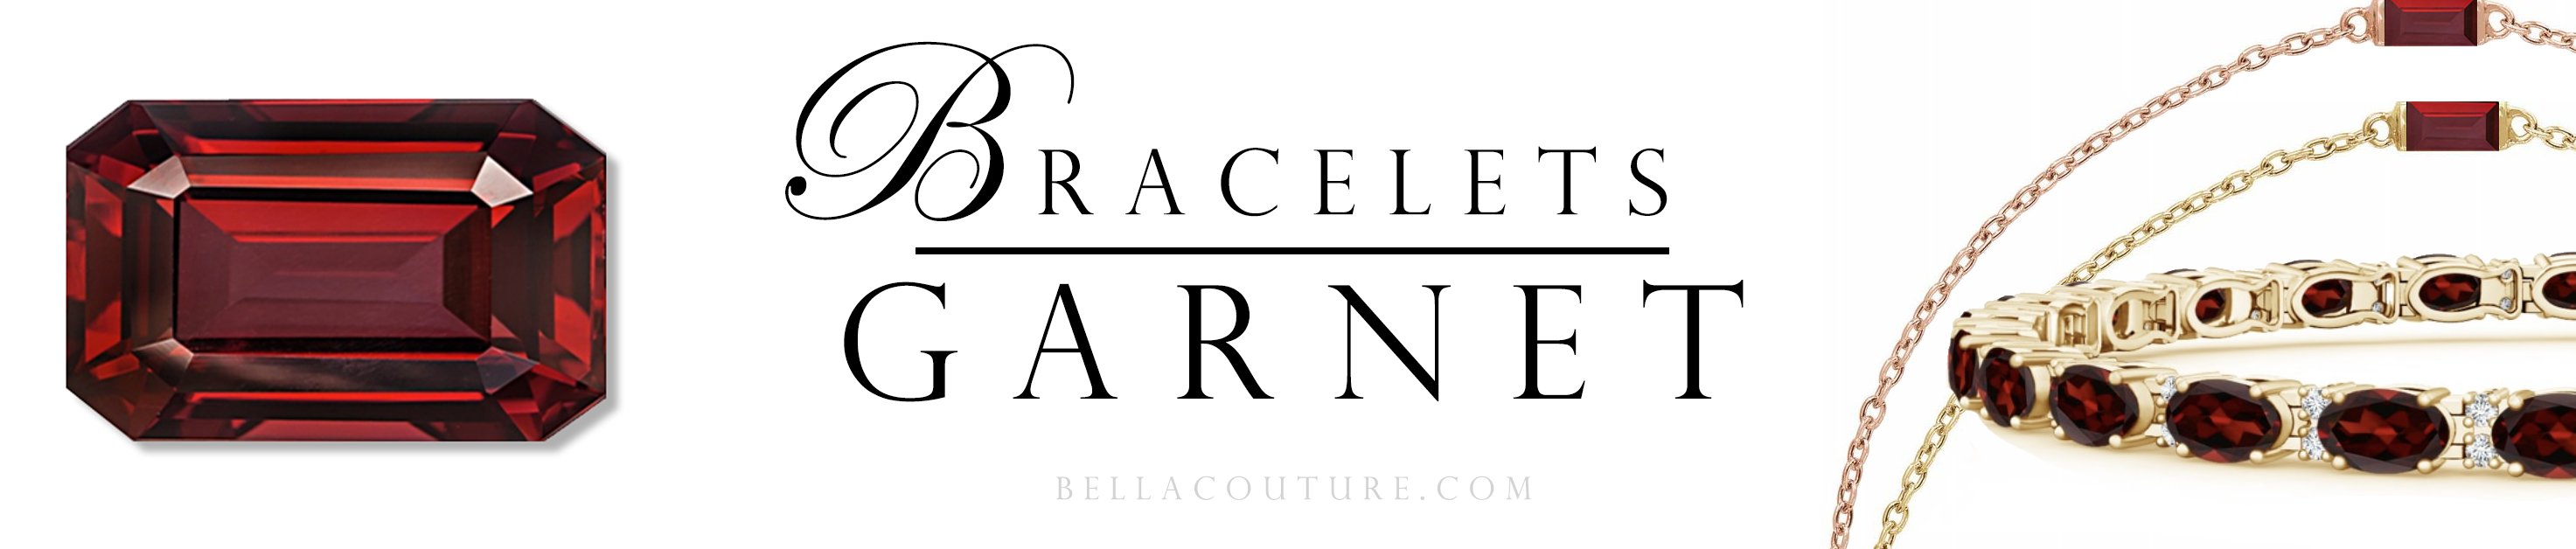 bella-couture-garnet-bracelets-new-jane-bordeaux-diamond-white-gold-gemstone-jewelry-jane-bordeaux-collection-1-1-copy.png